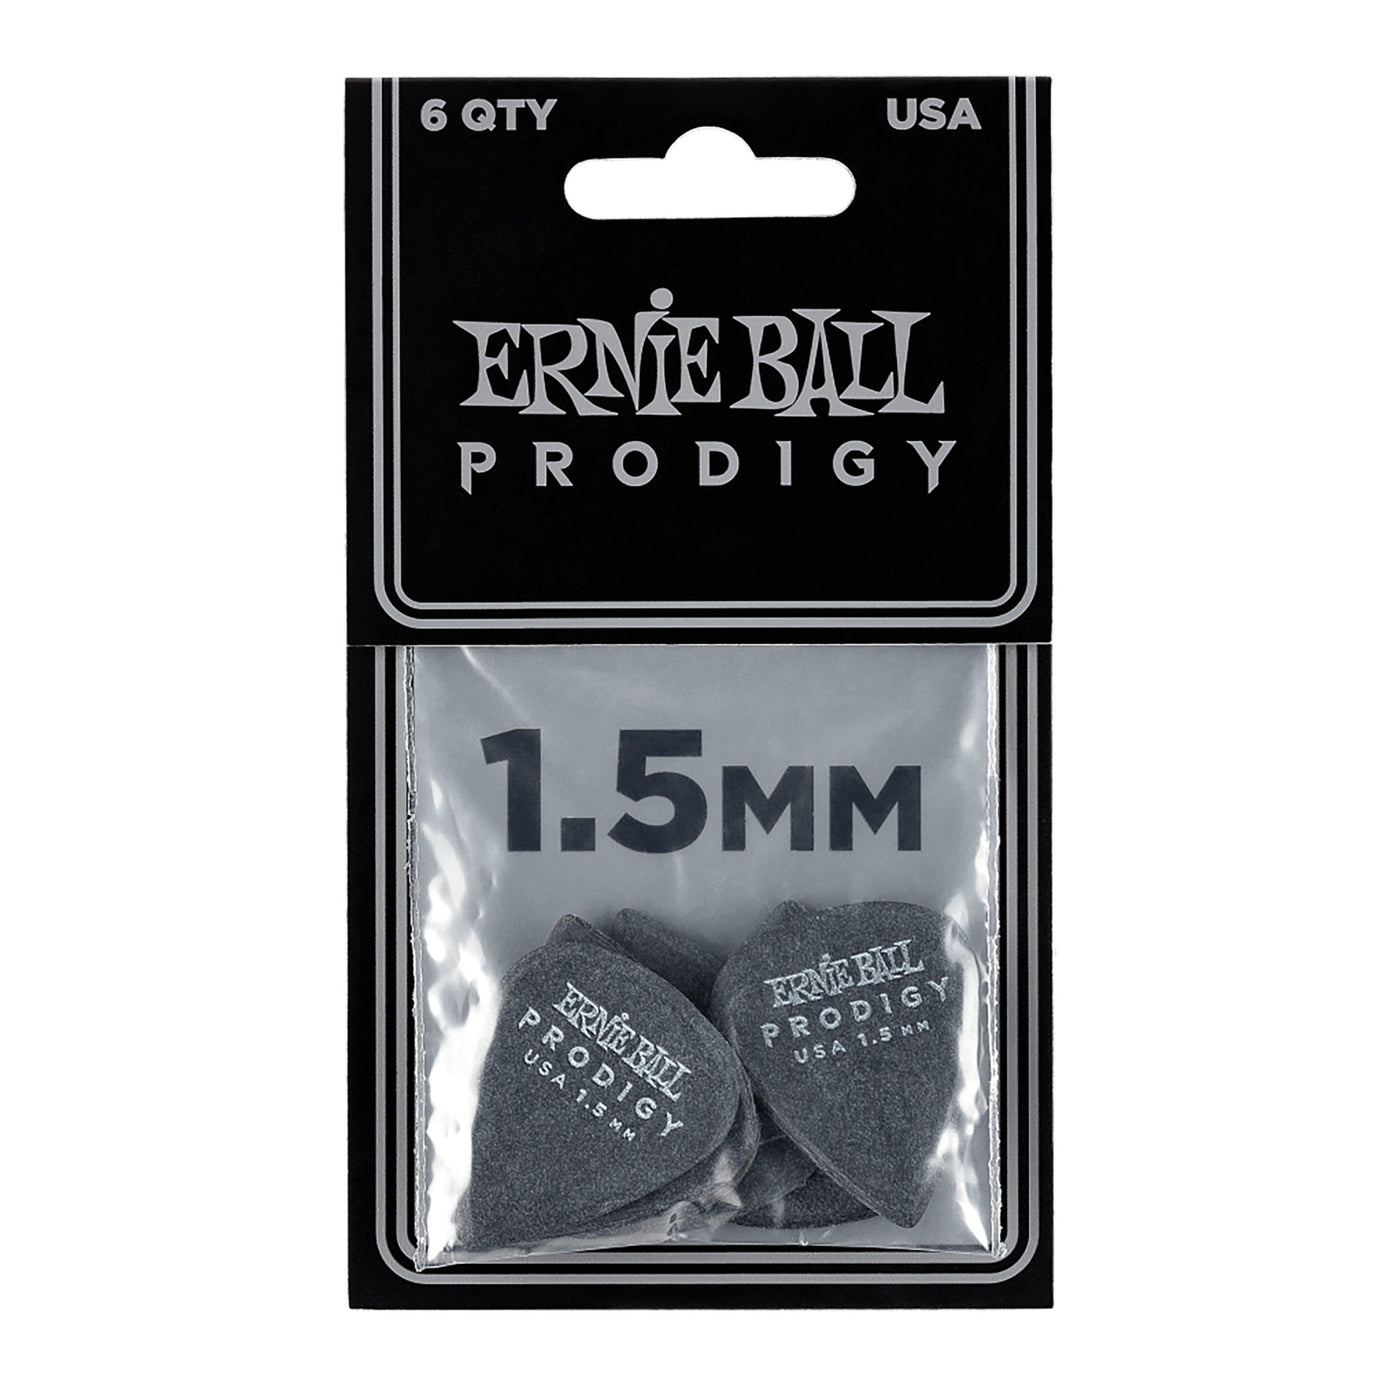 Ernie Ball 1.5mm Black Standard Prodigy Picks 6-Pack